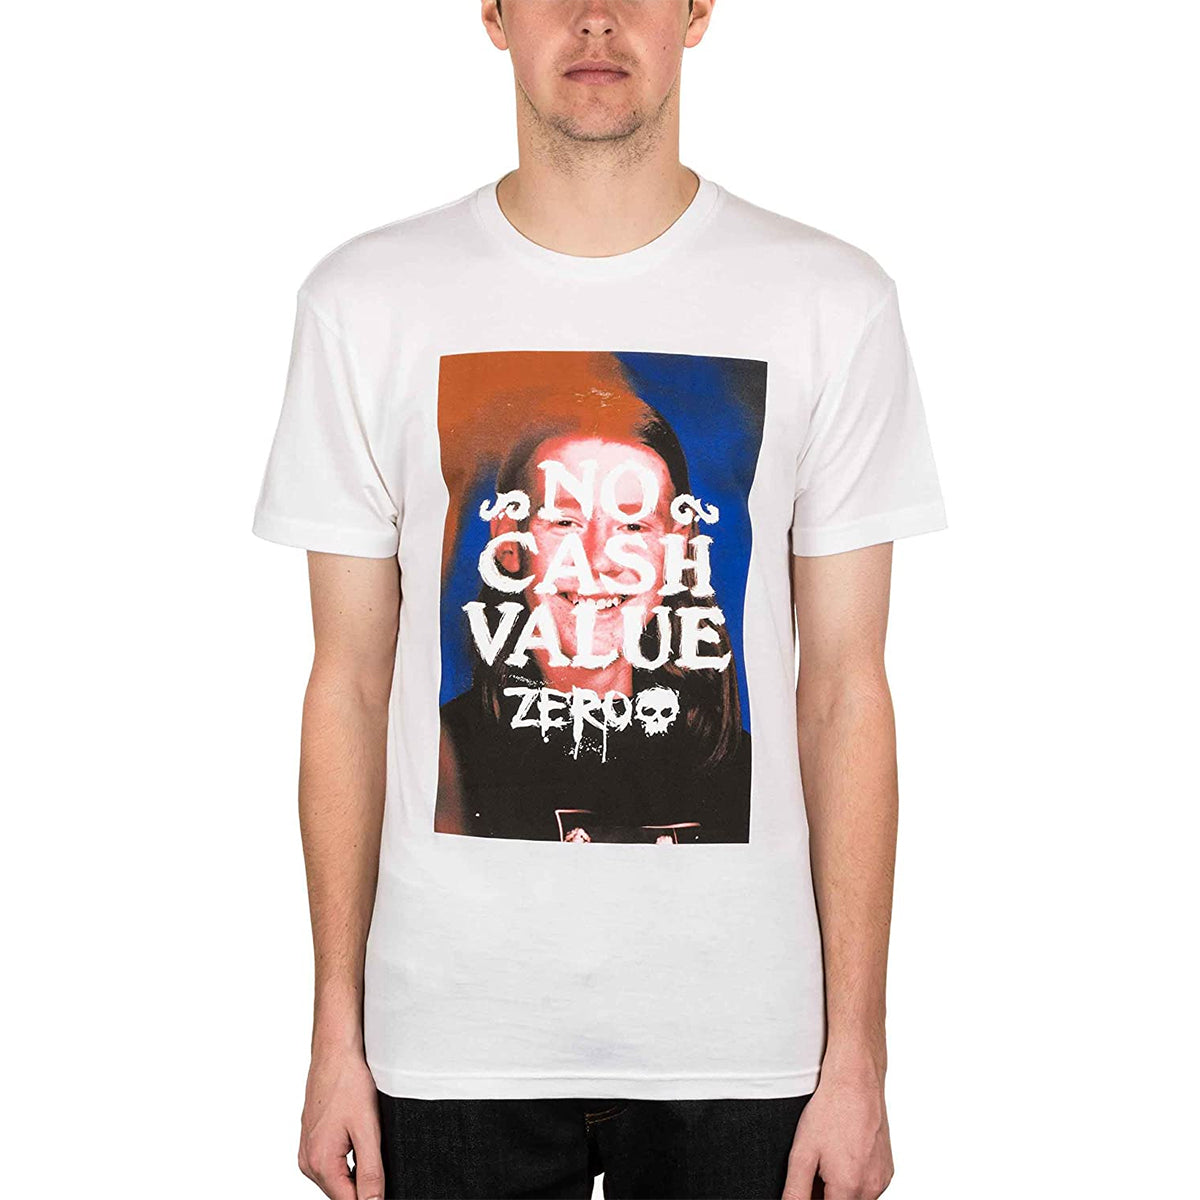 Zero No Cash Value Men's Short-Sleeve Shirts-20034037